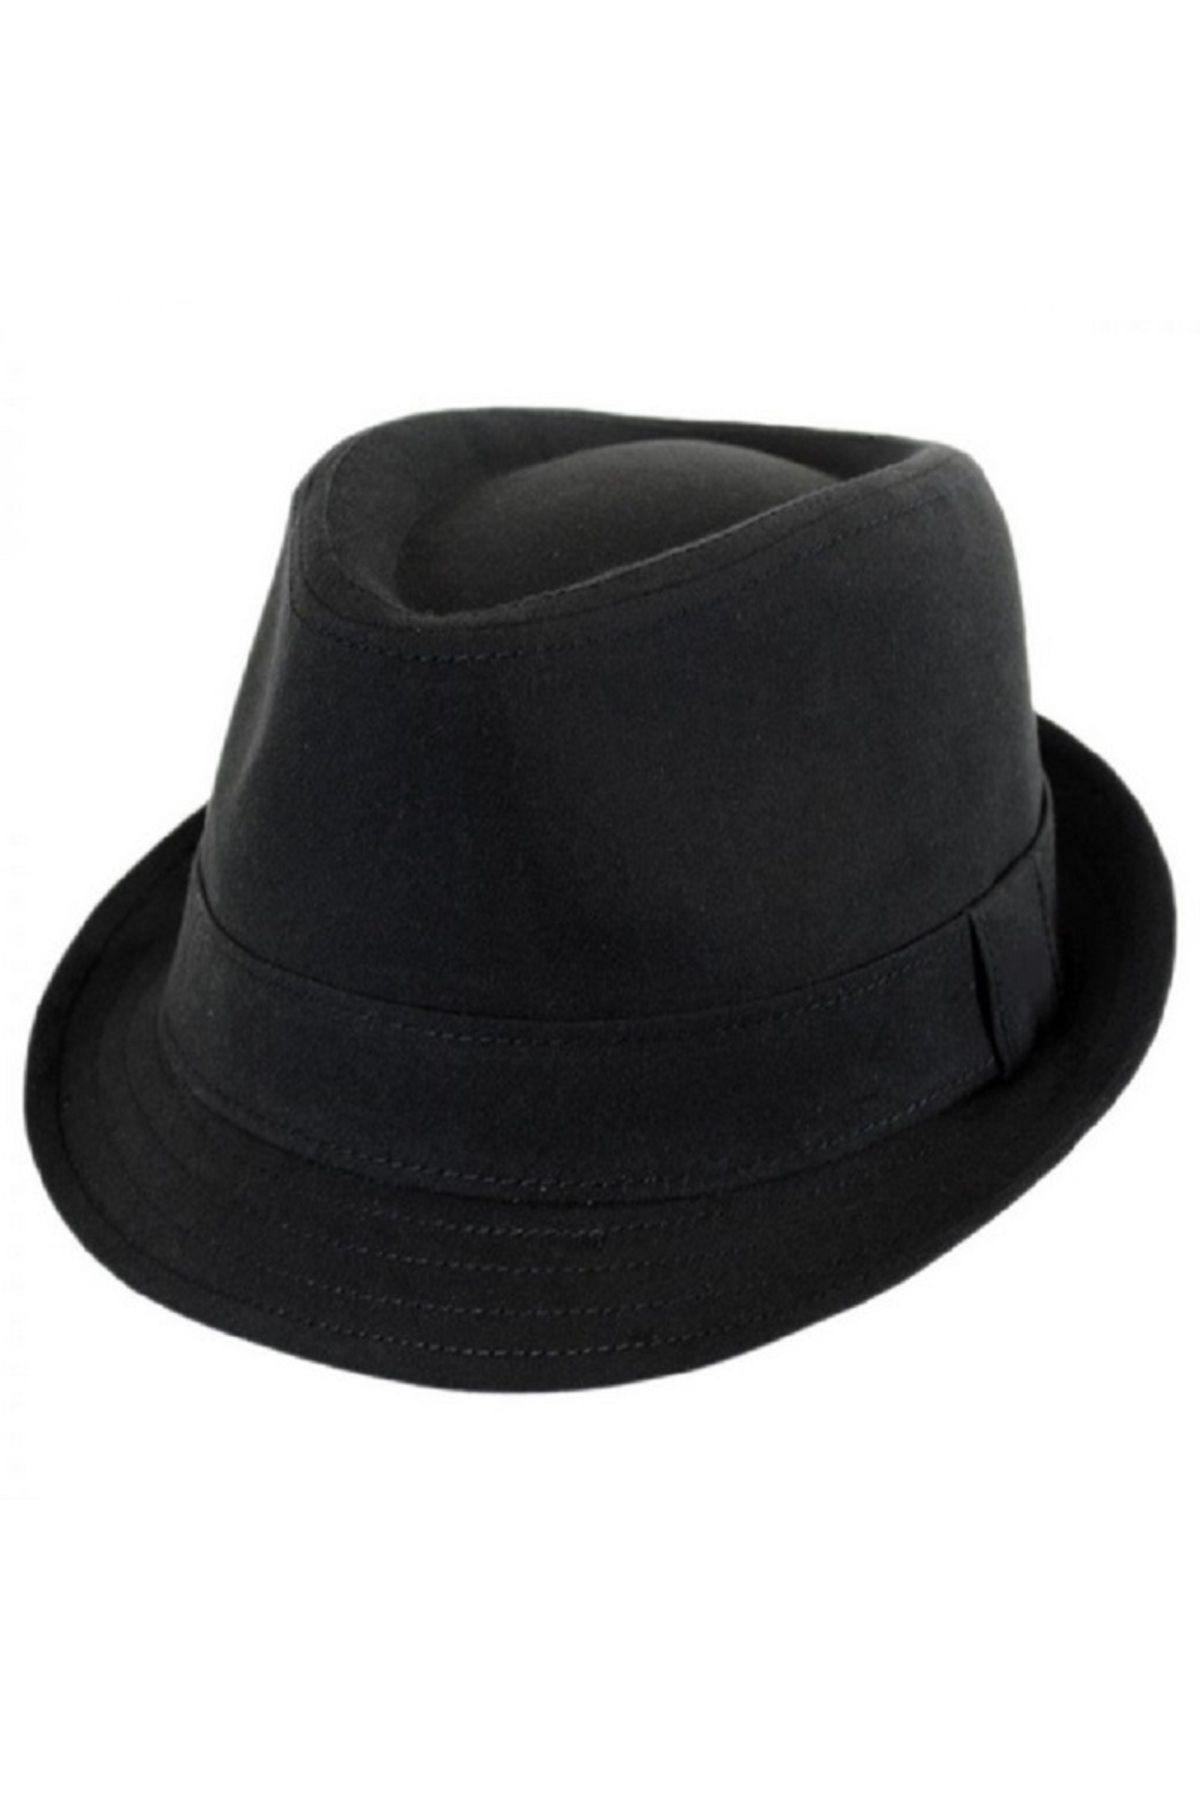 tahtakale marketi Michael Jackson Fötr Şapka Siyah 56 cm